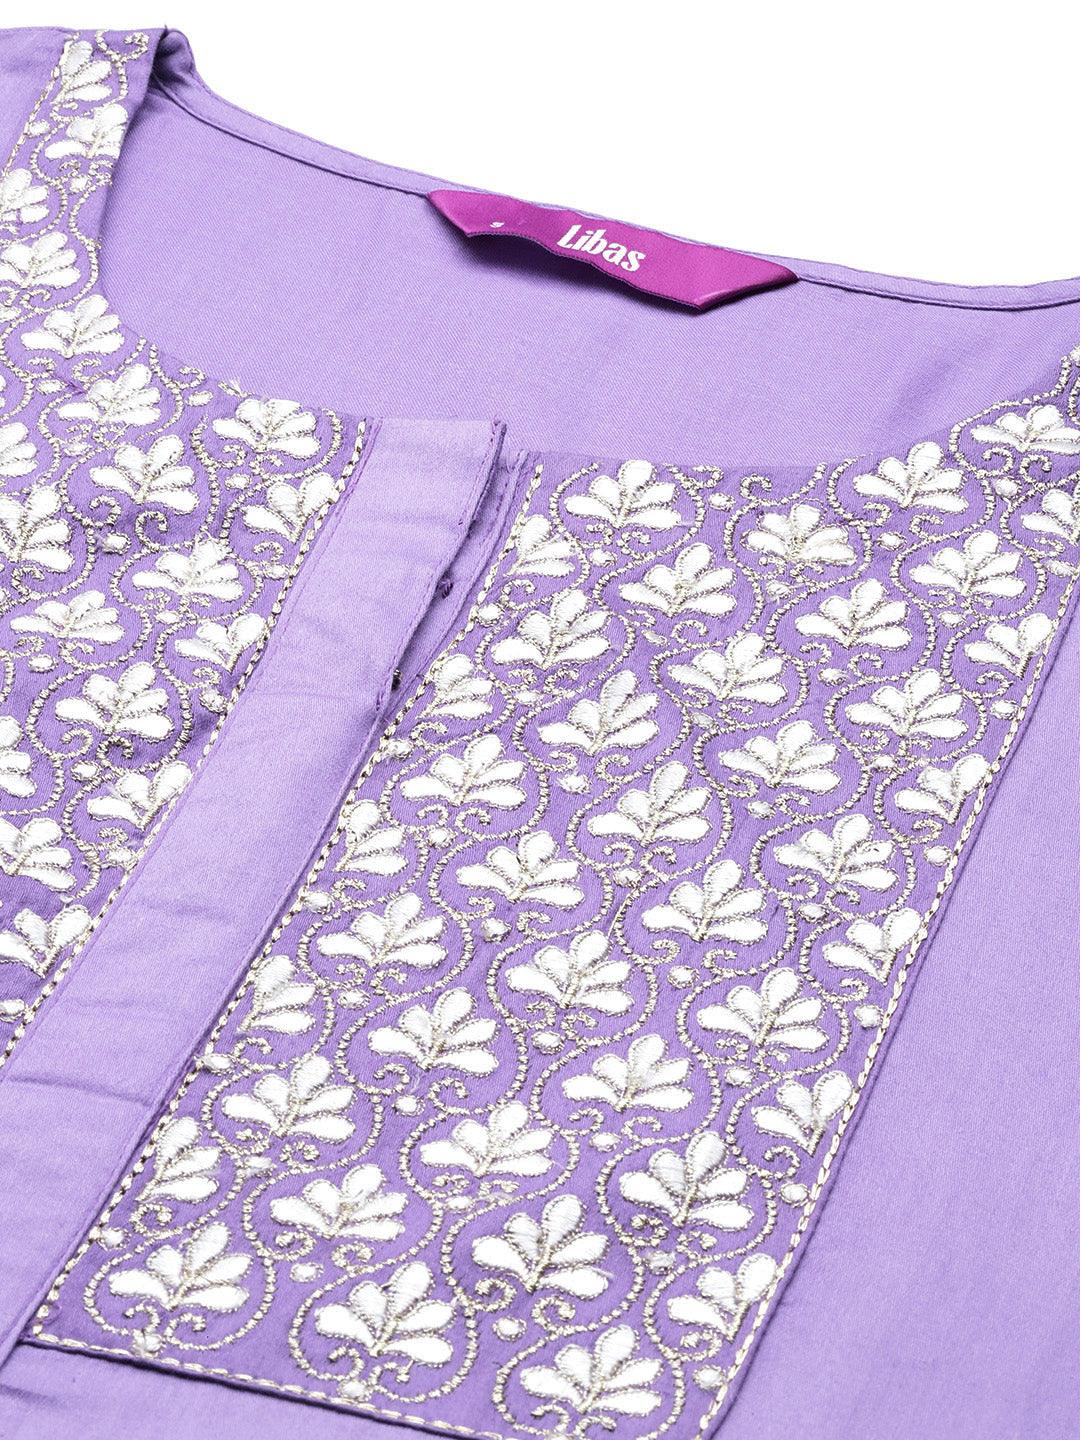 Lavender Yoke Design Silk Blend Straight Kurta With Palazzos & Dupatta